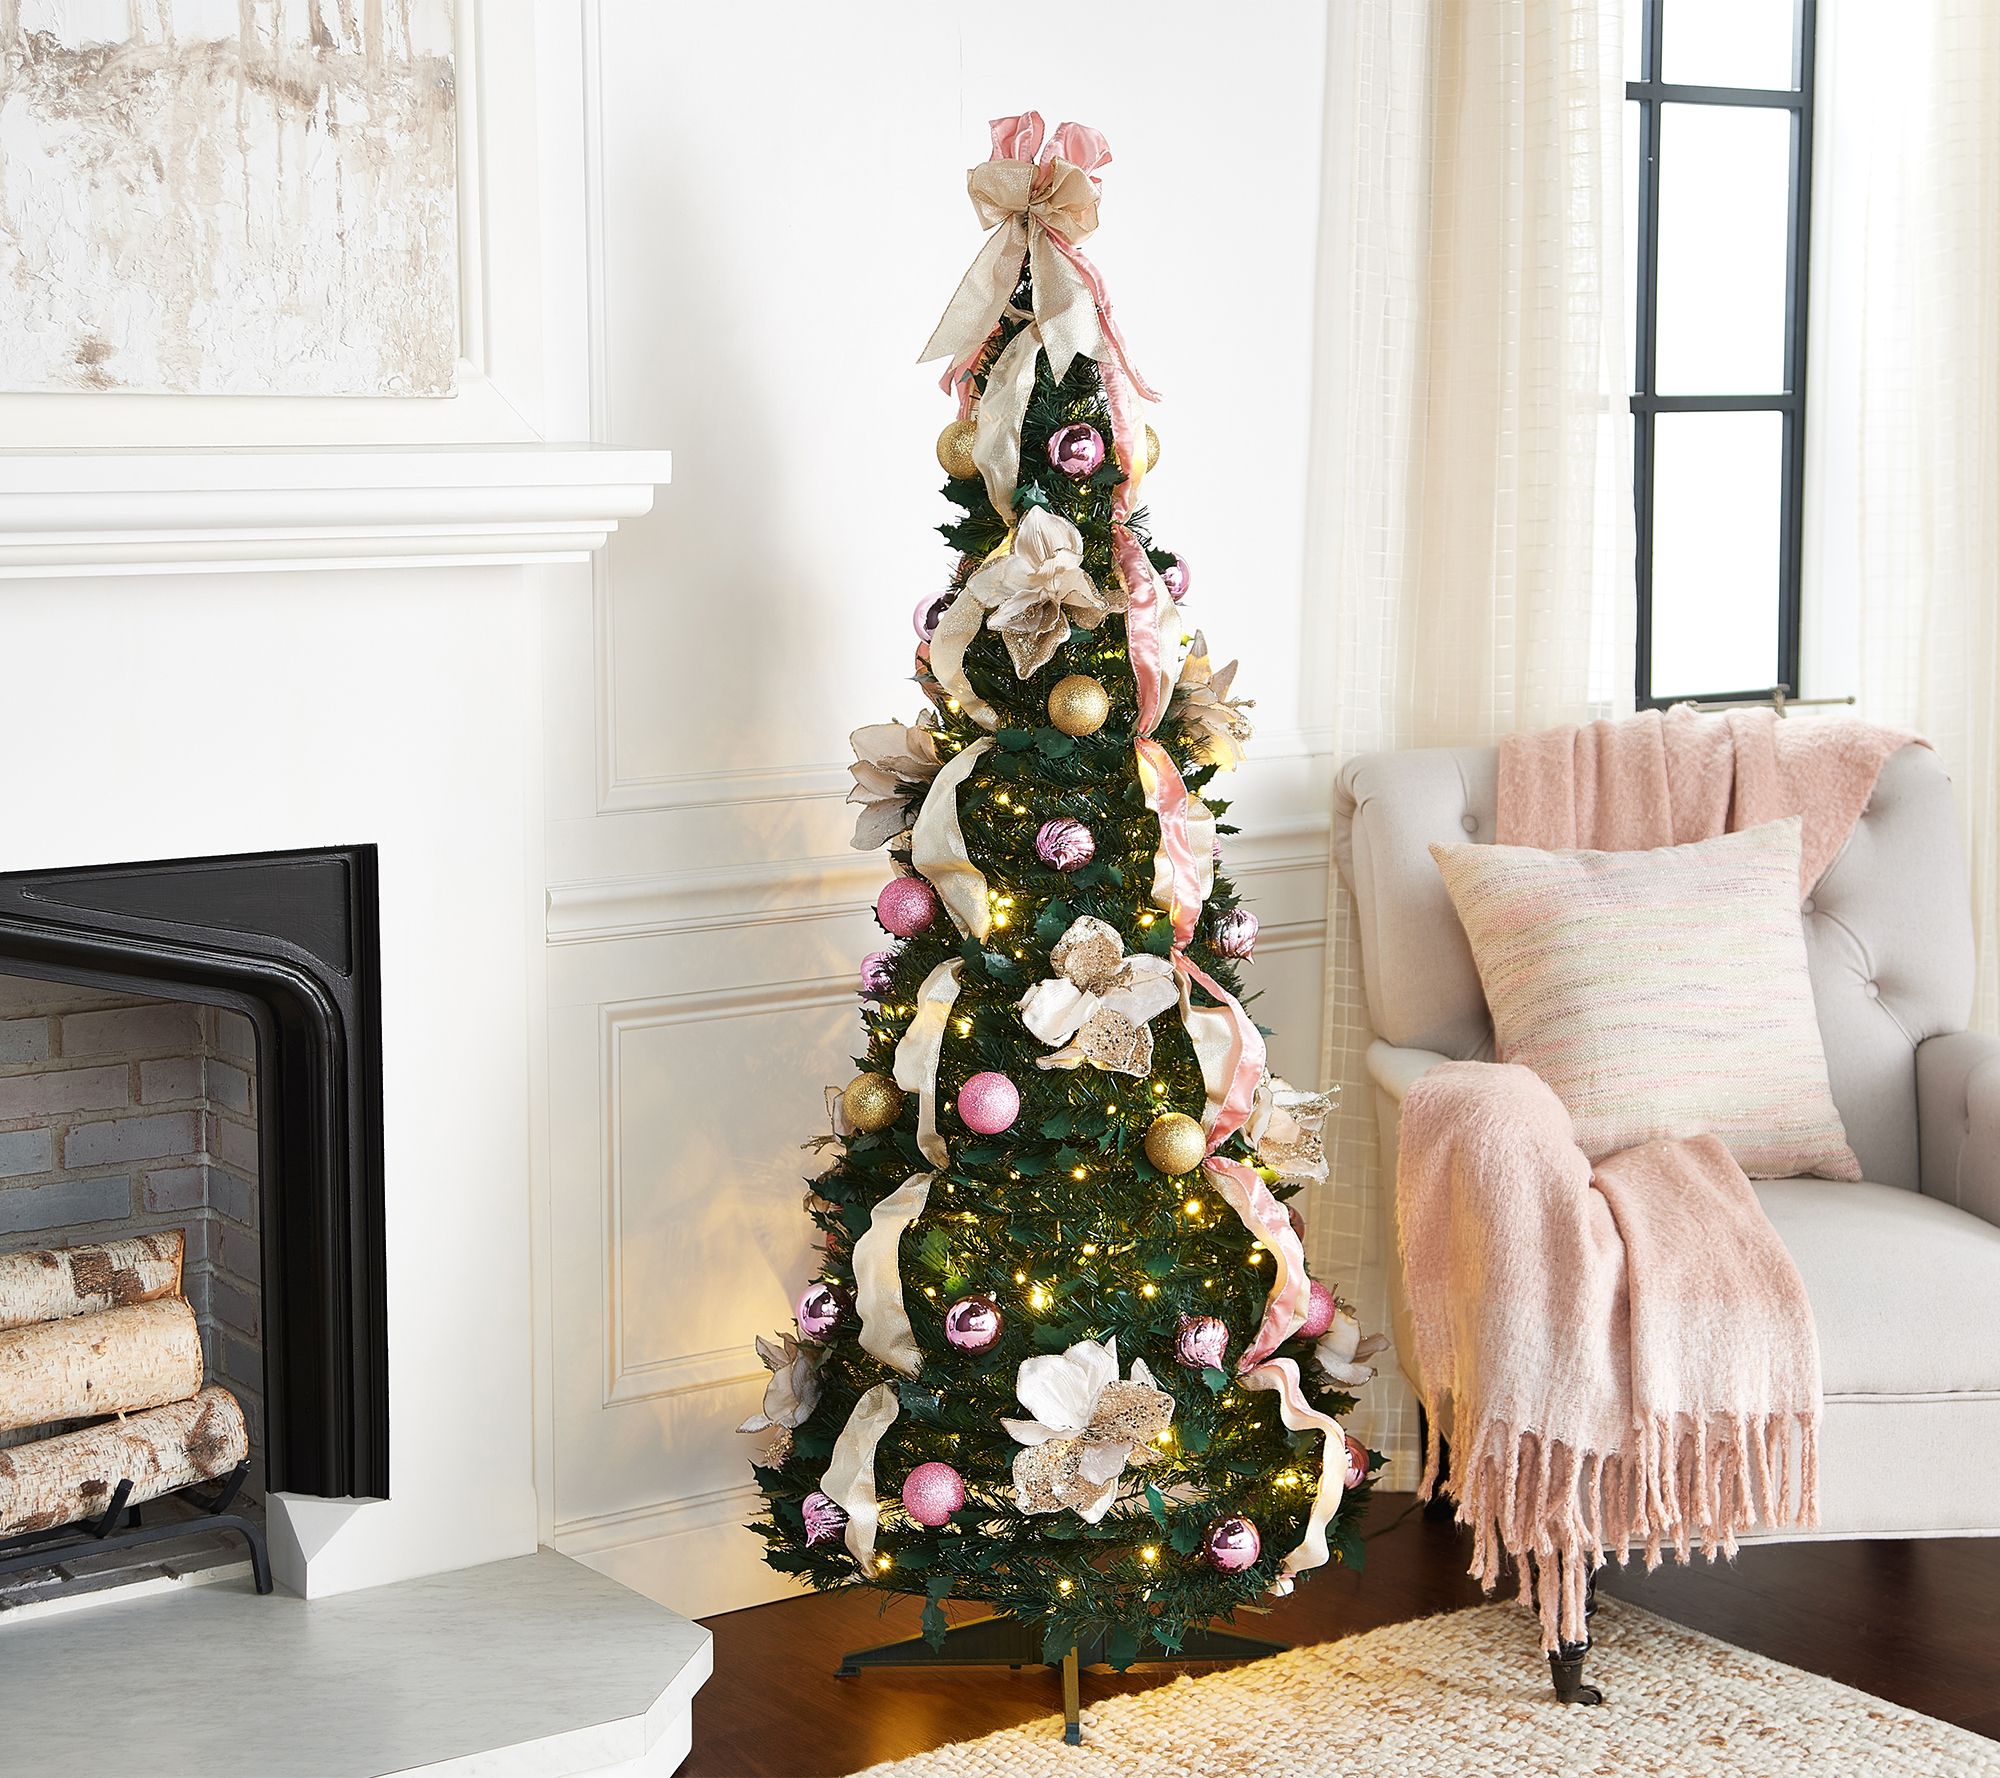 Barbara King 5' Pre-Lit Holiday Floral Pop Up Tree - QVC.com